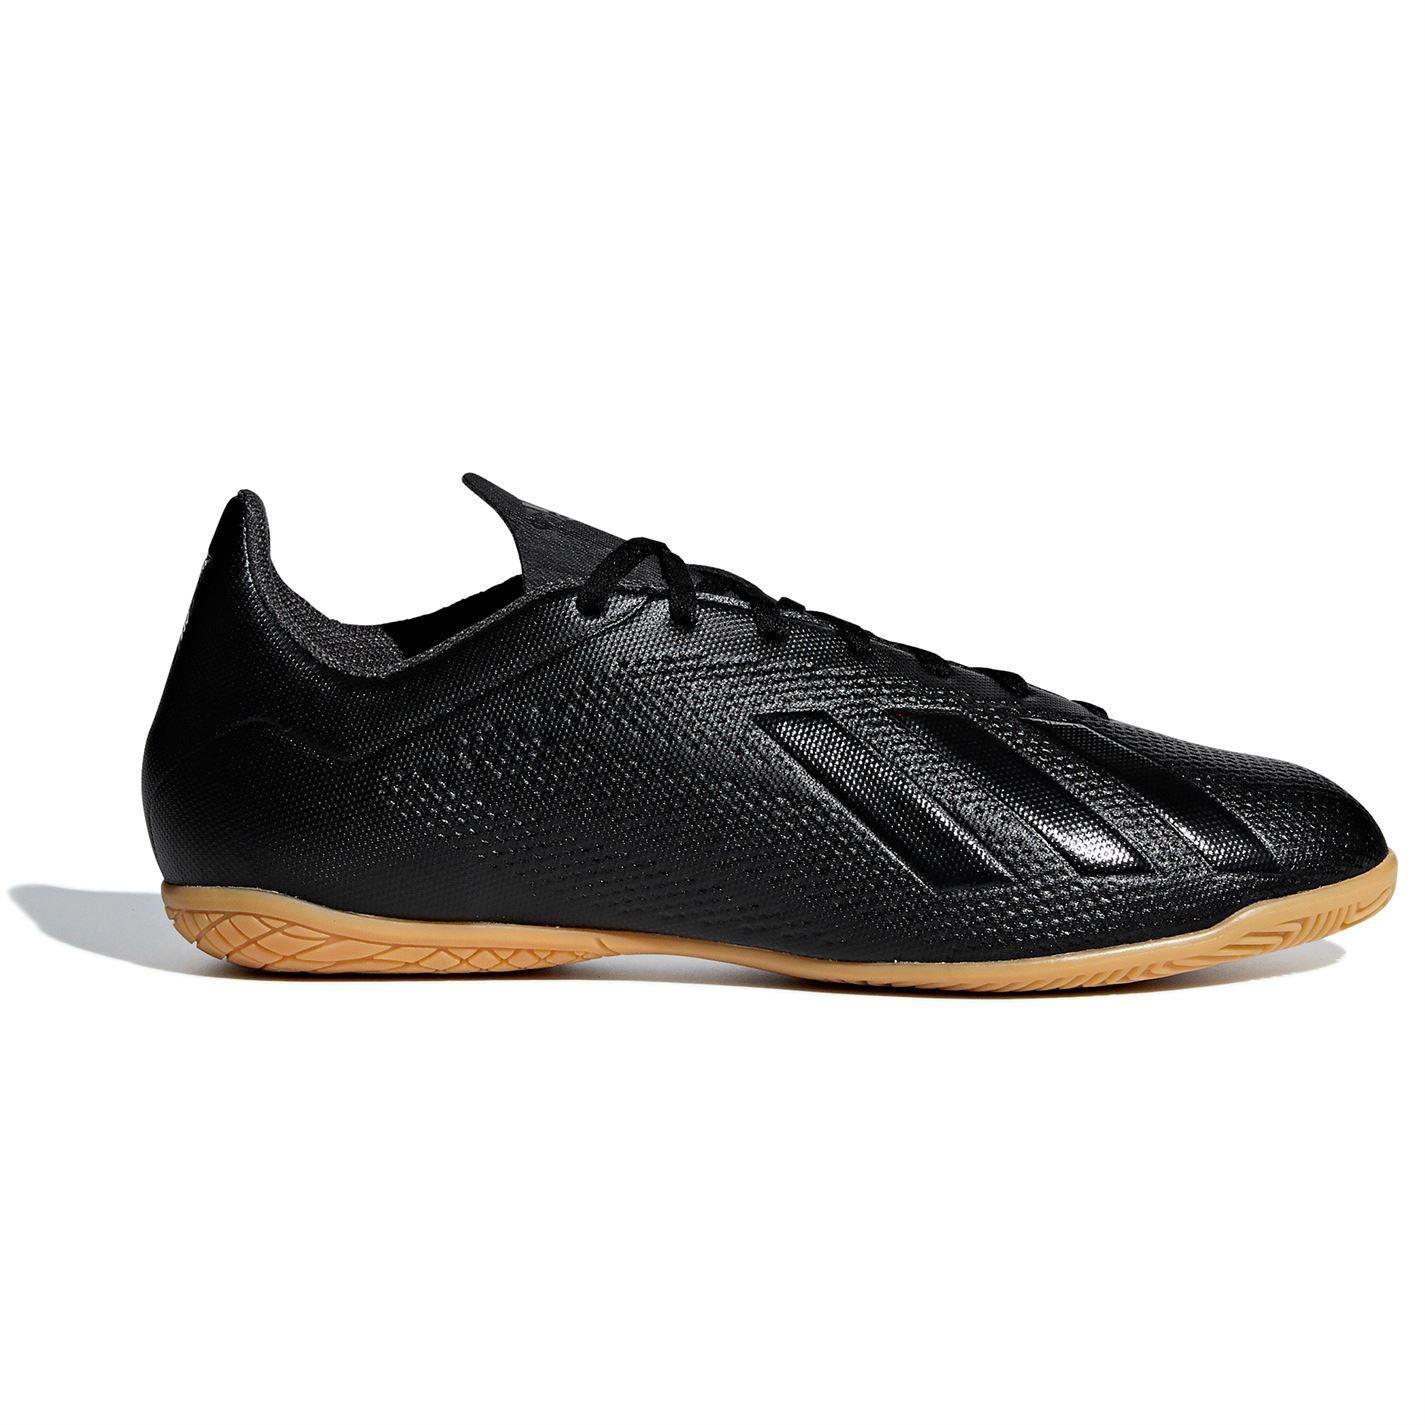 Pantof sport Fotbal adidas X 18.4 Tango Indoor barbat